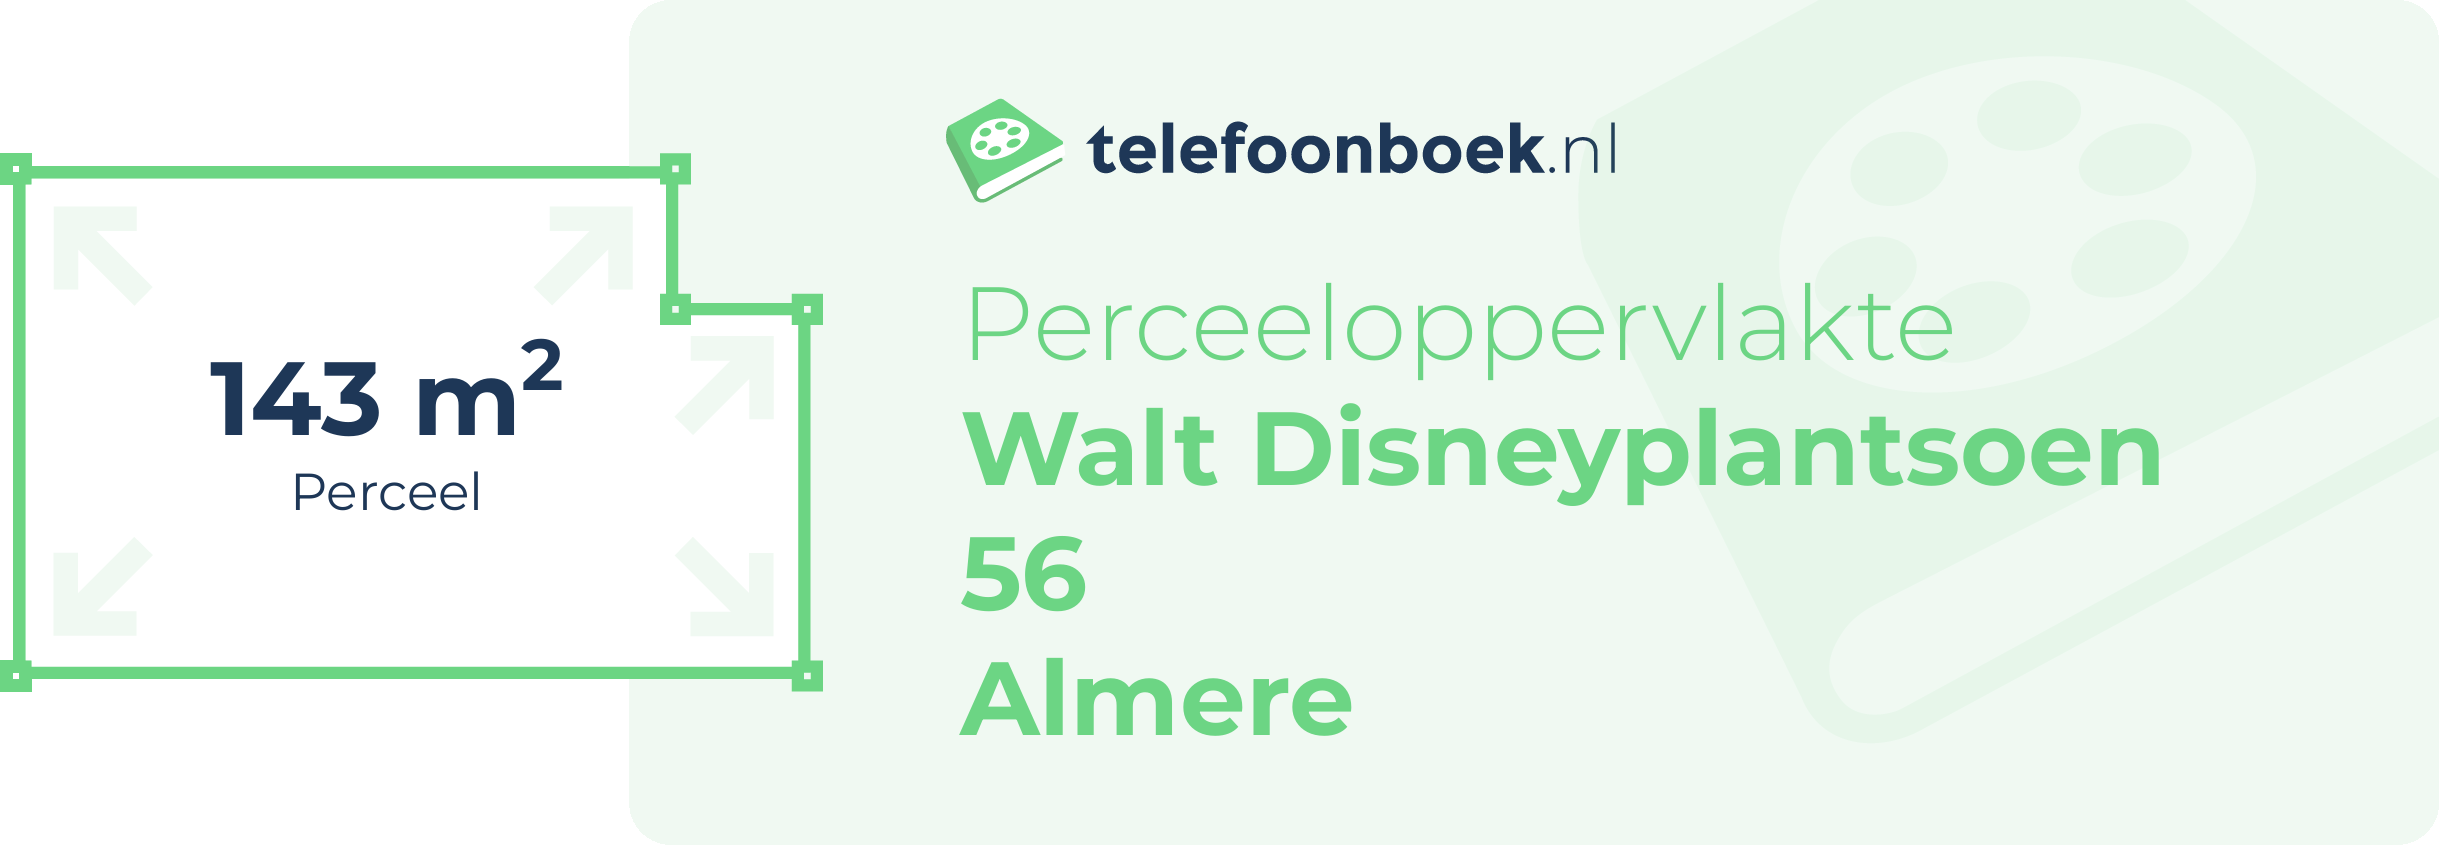 Perceeloppervlakte Walt Disneyplantsoen 56 Almere